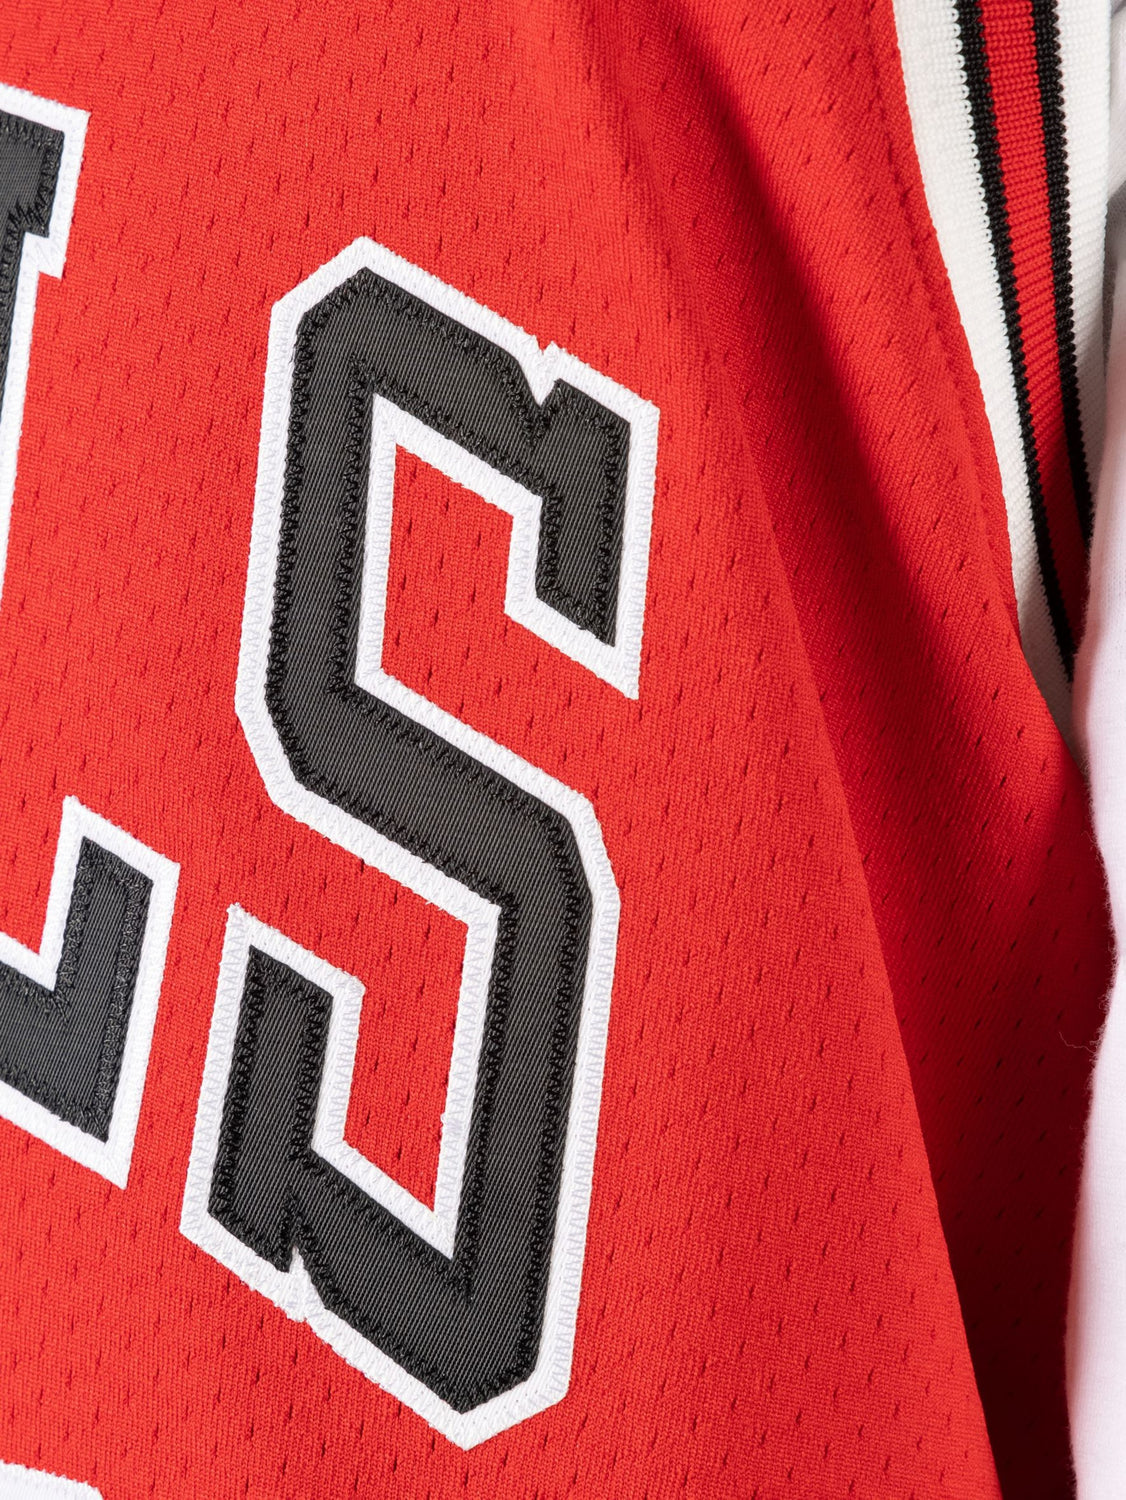 Michael Jordan Chicago Bulls NBA Finals 1995-96 Authentic Hardwood Cla -  Throwback